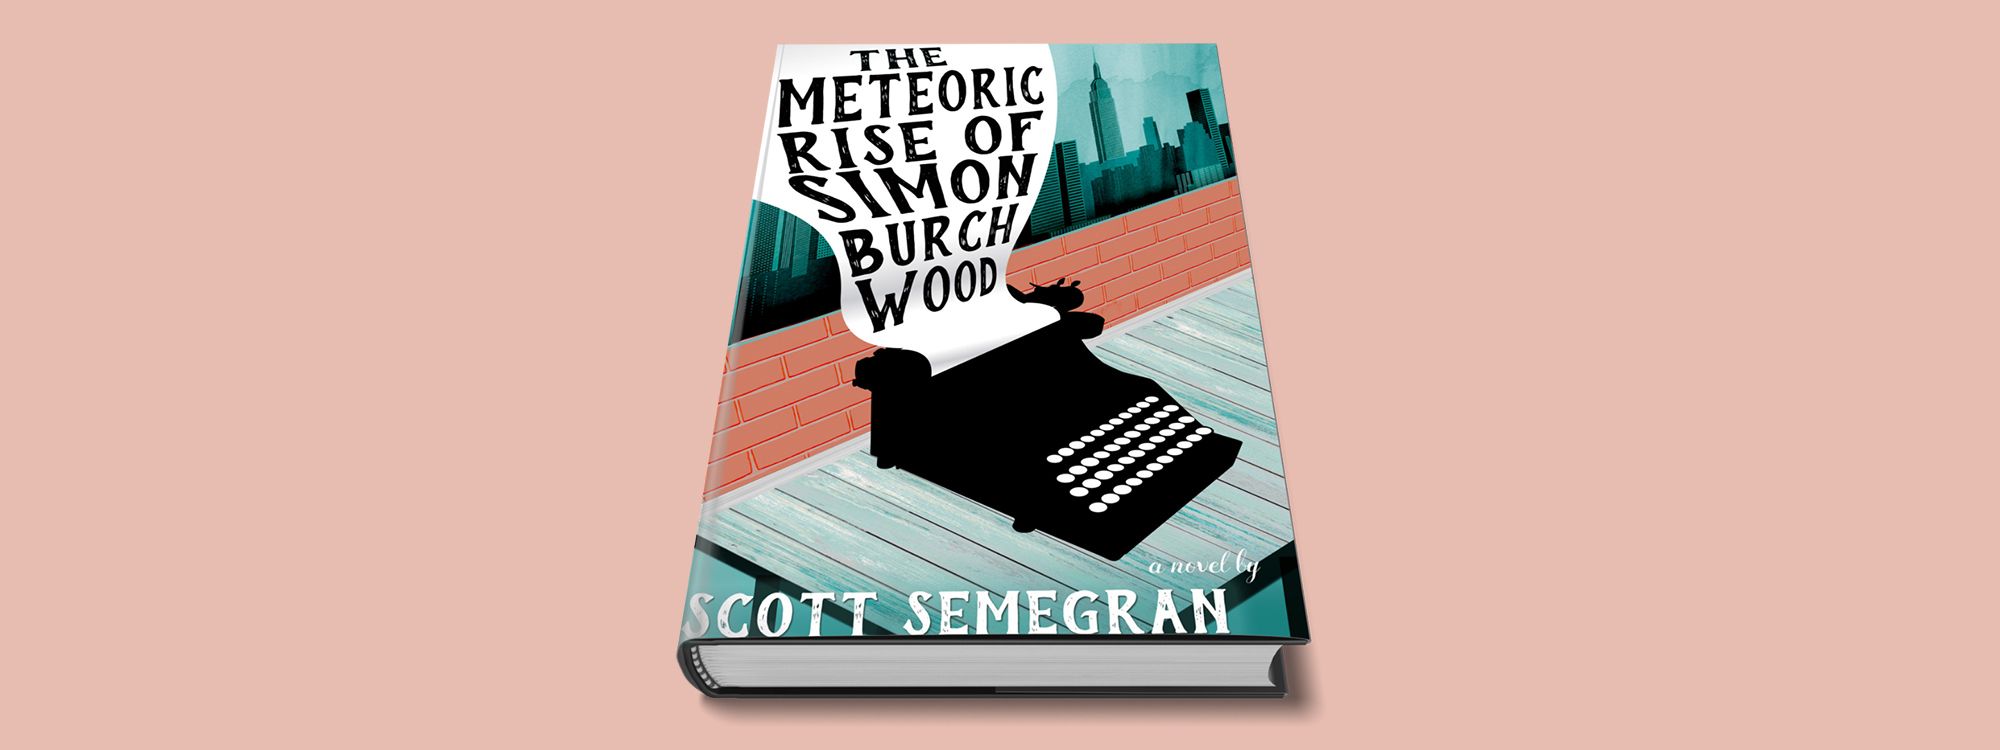 The Meteoric Rise of Simon Burchwood by Scott Semegran